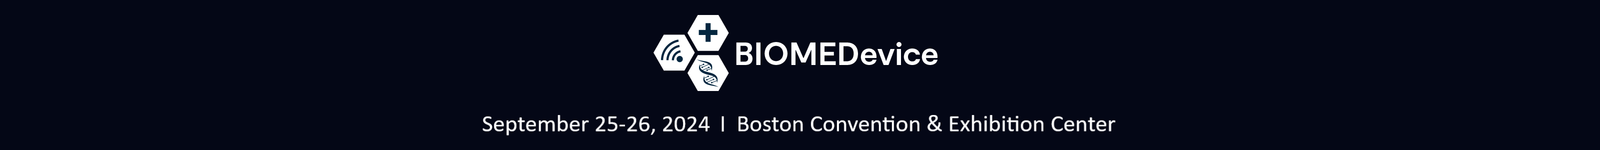 BIOMEDevice Boston 2024 logo